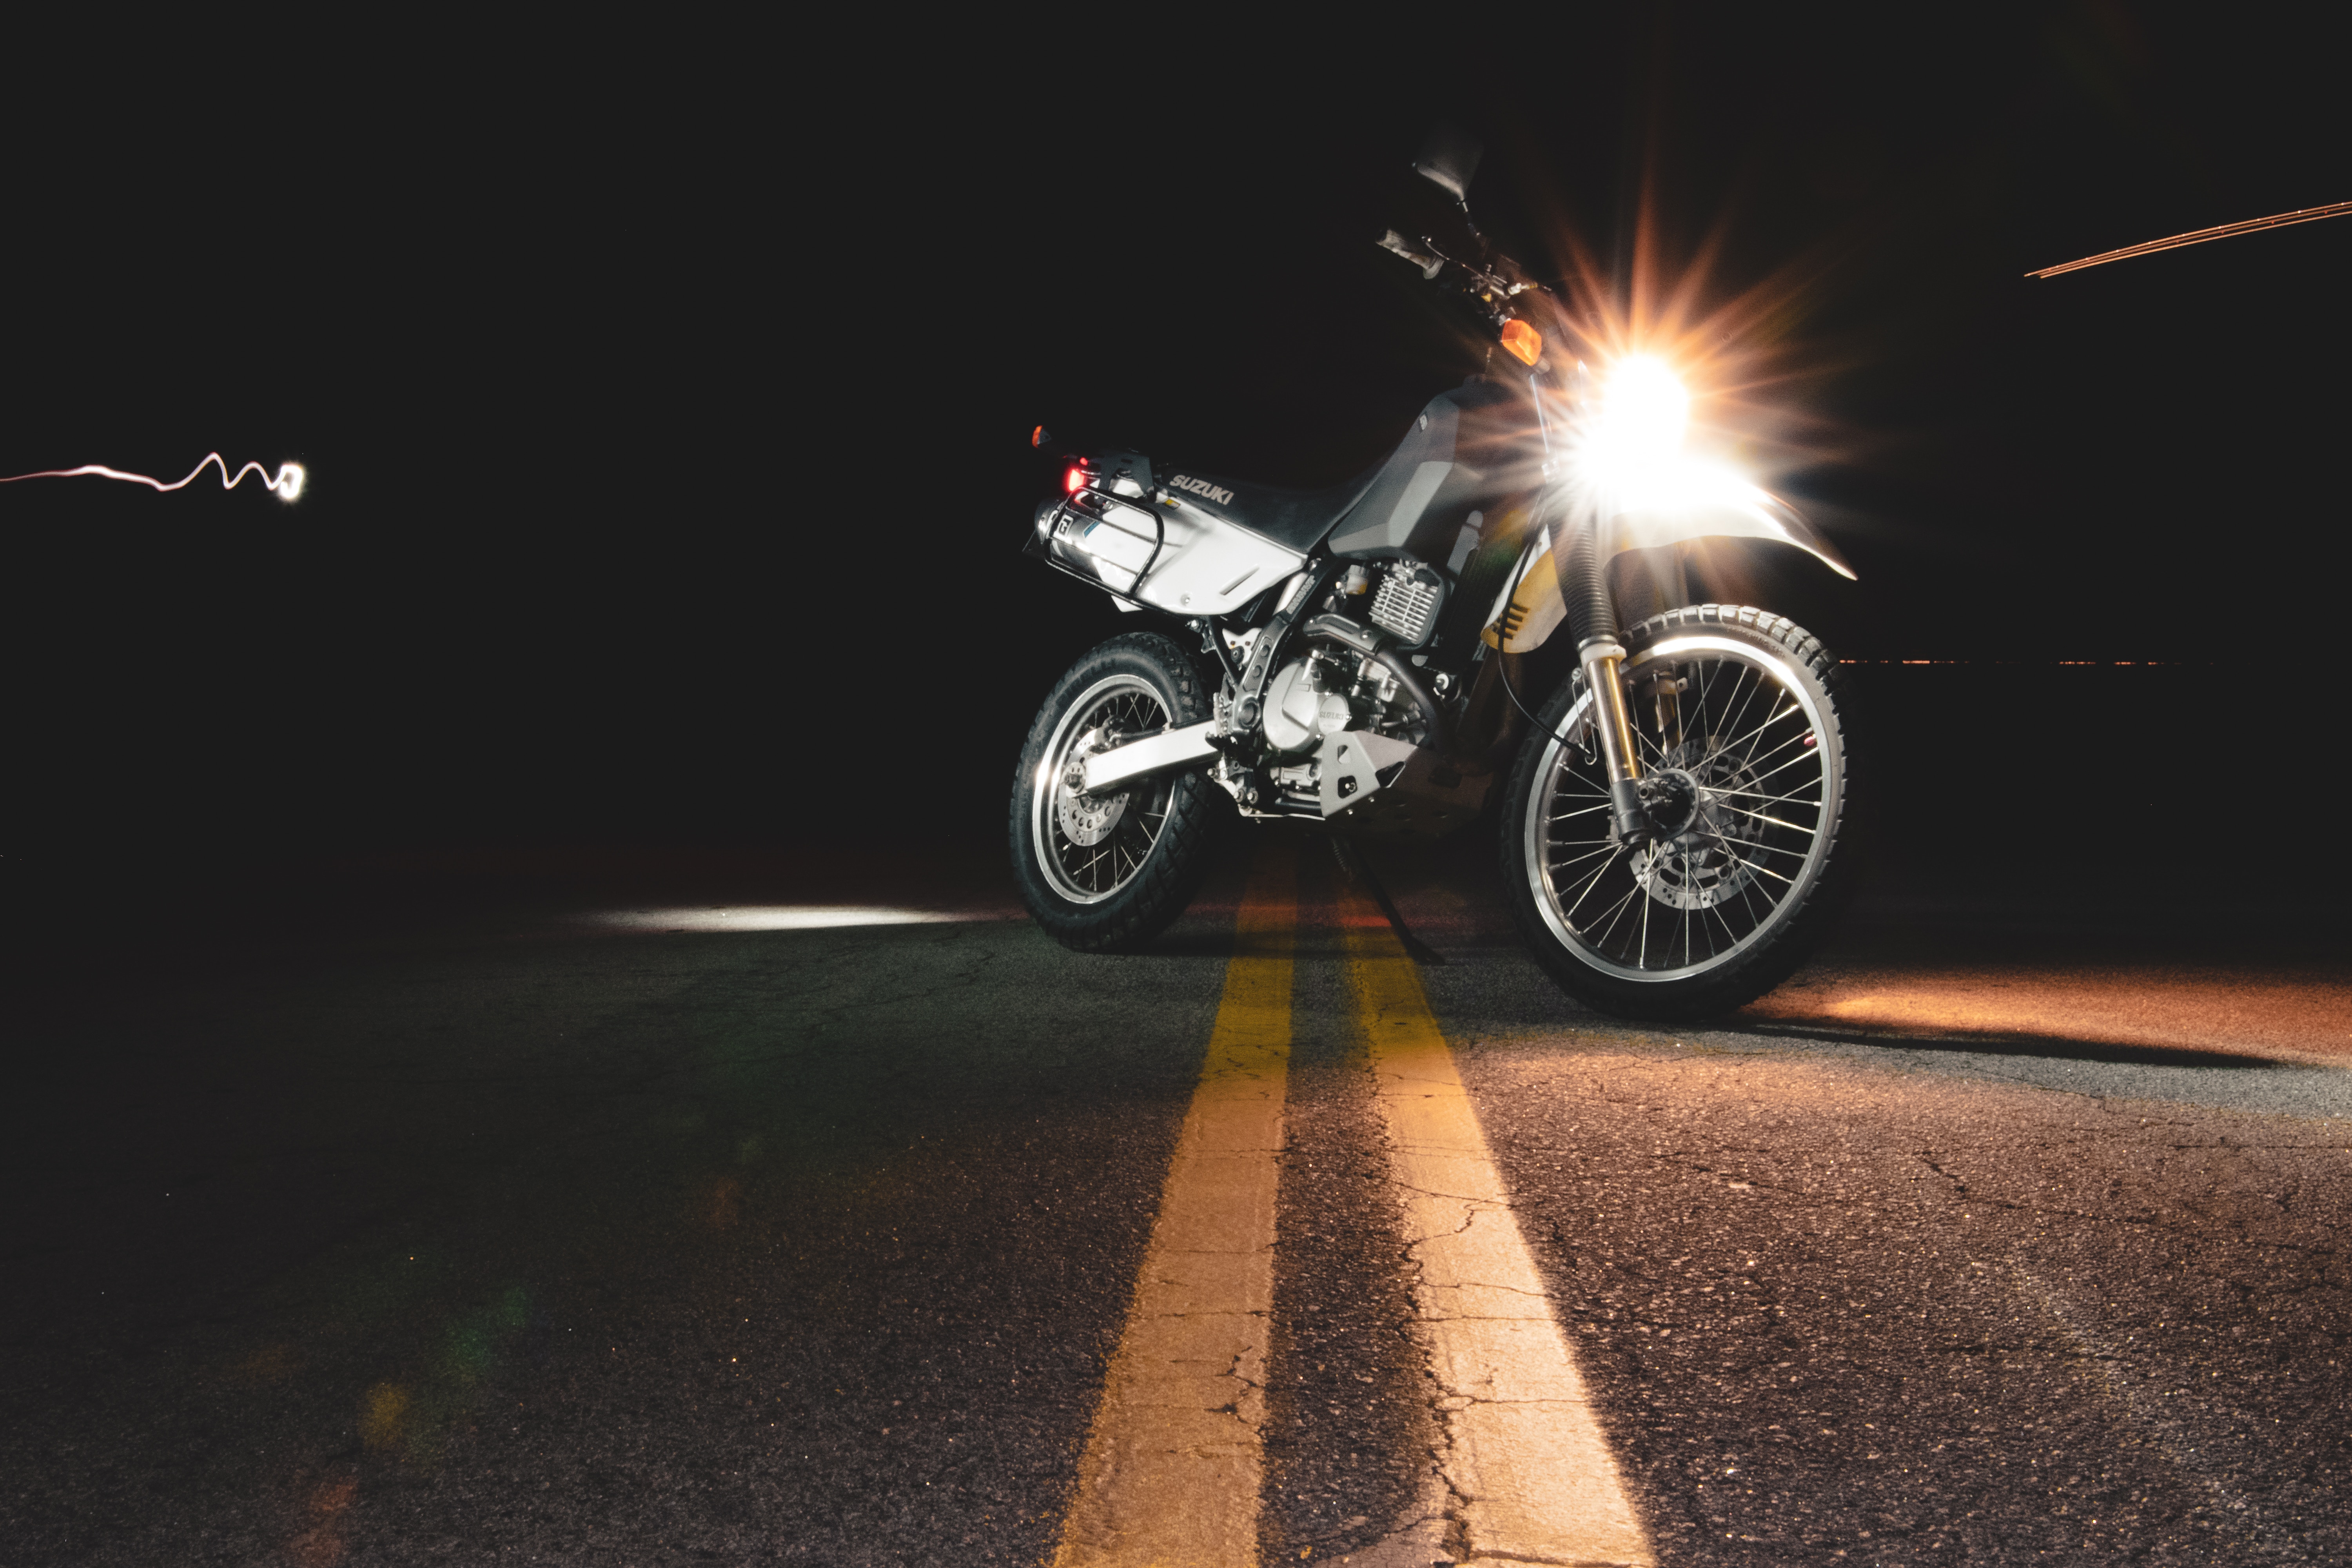 asphalt, motorcycles, motorcycle, lights, shine, light, headlights